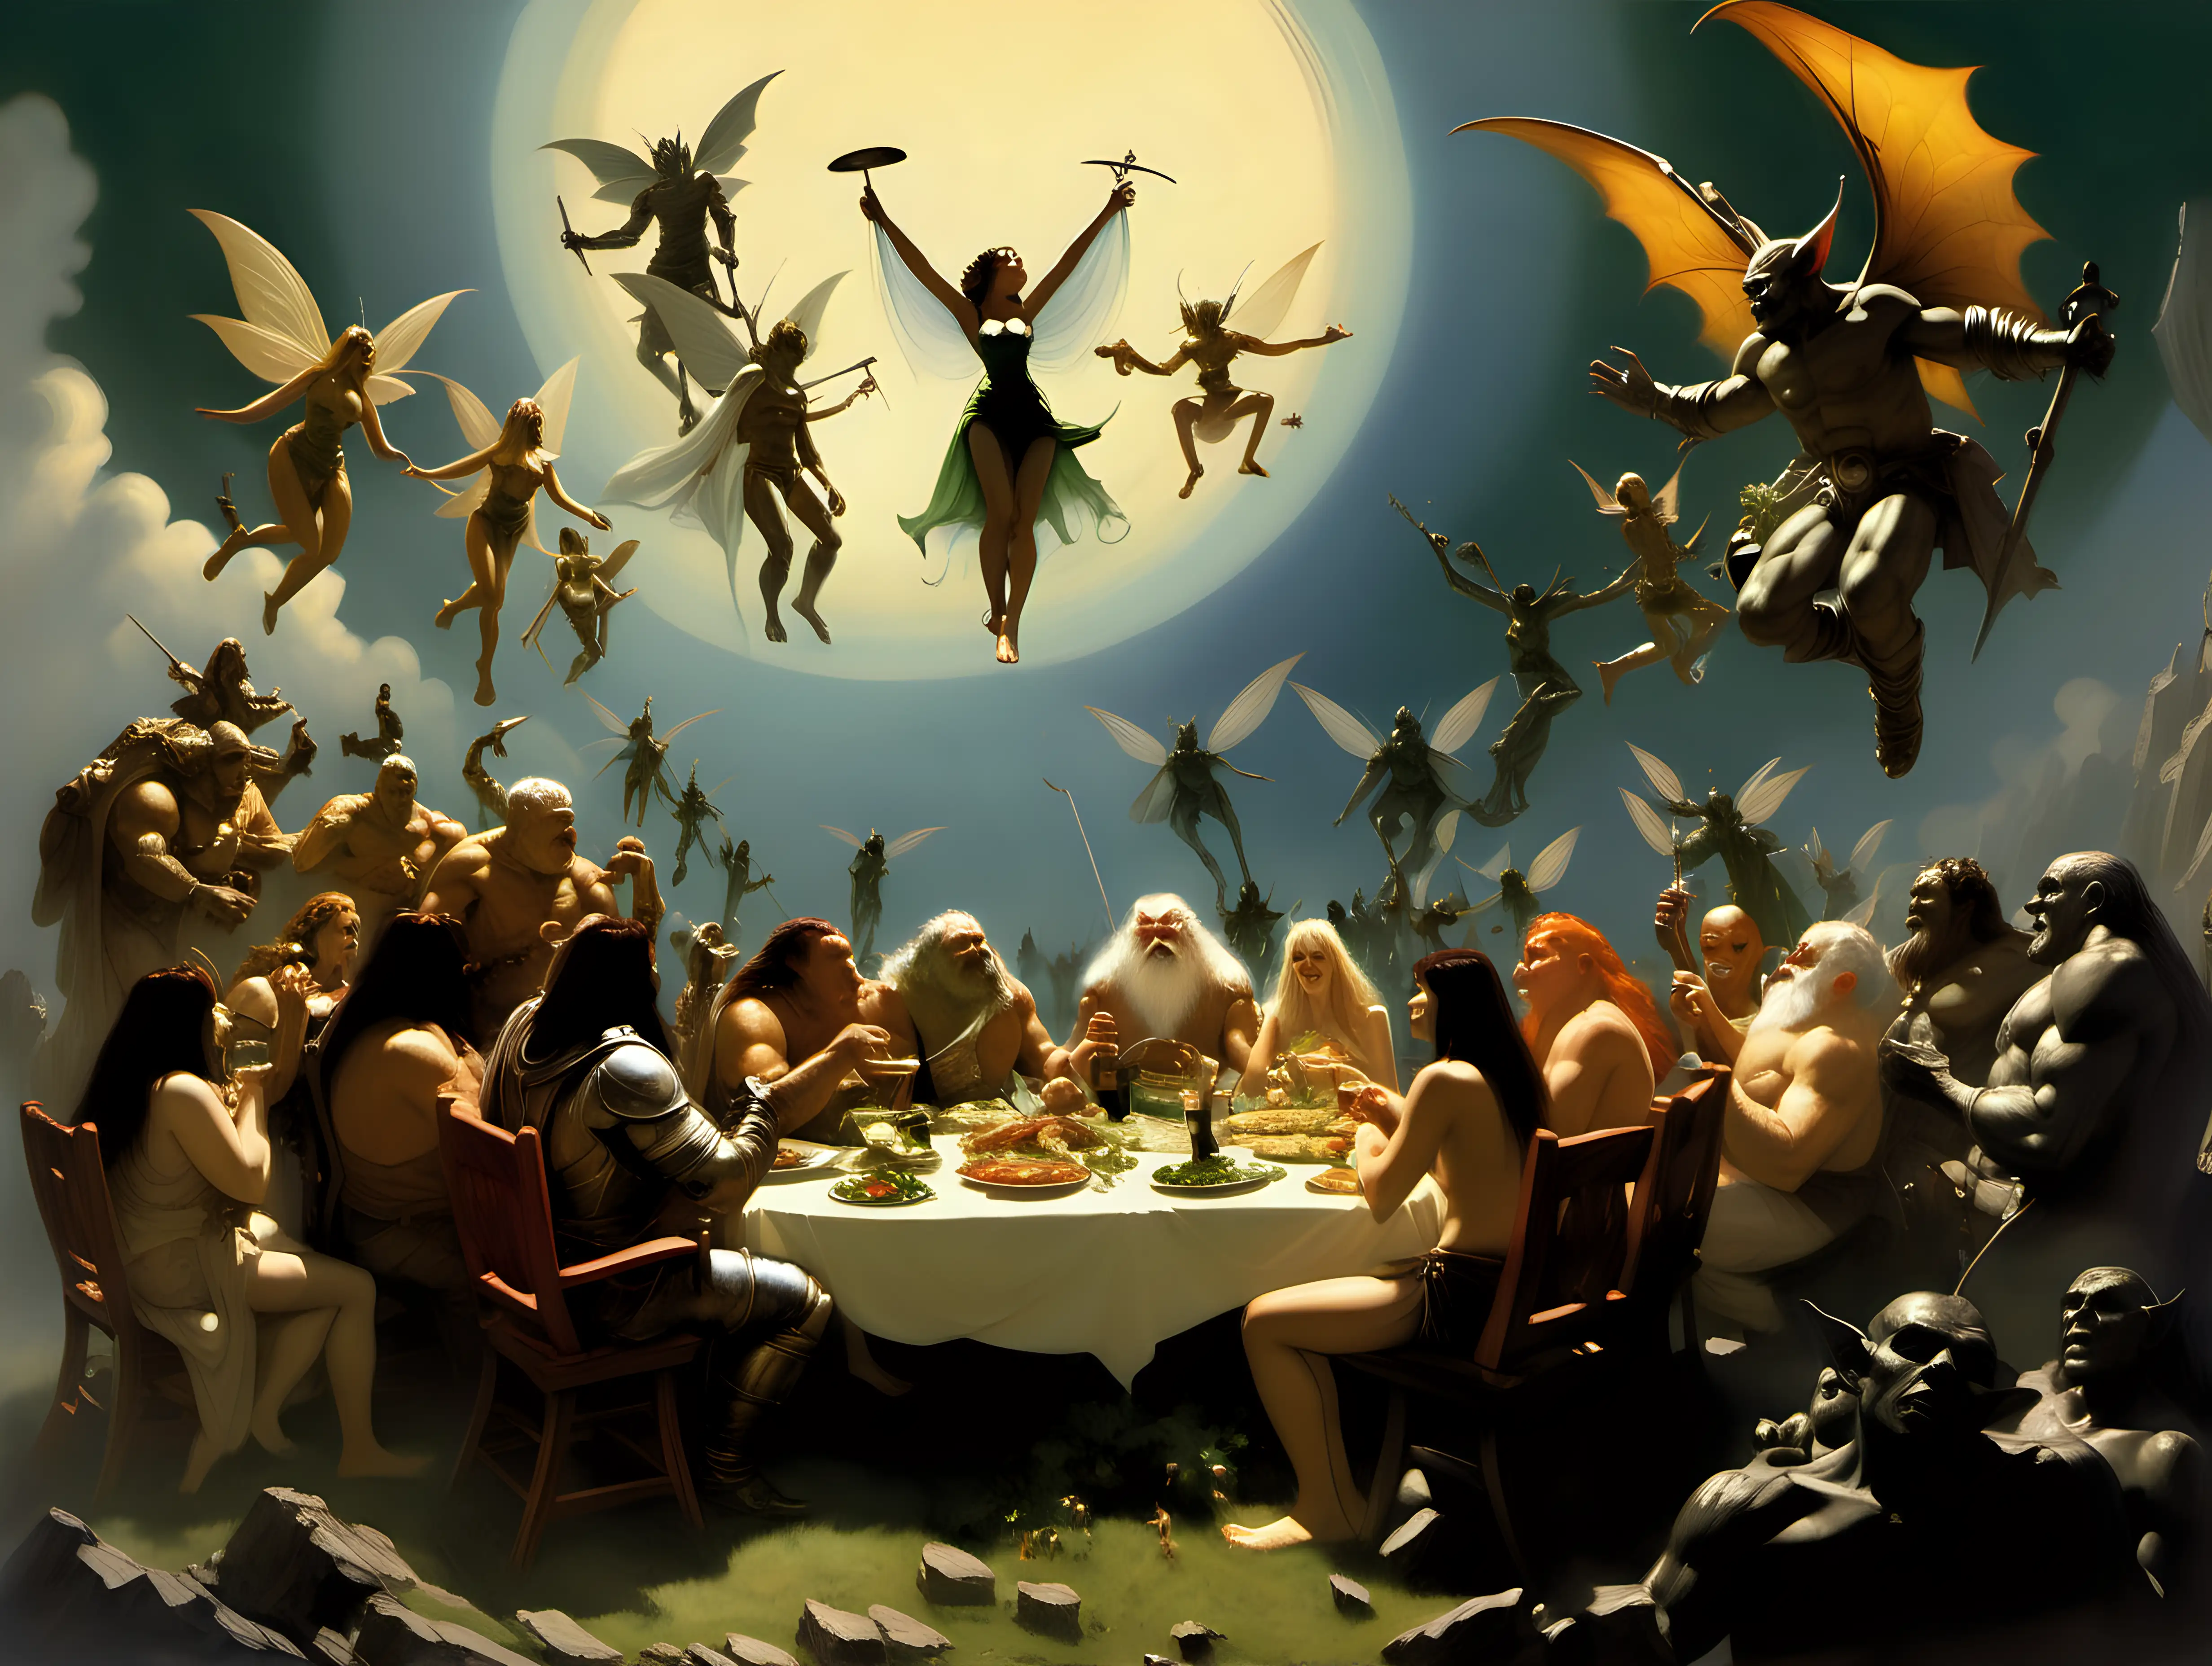 Fantasy Feast Hobbits Giants Fairies and Elves Celebrate in Heavenly Frank Frazetta Style